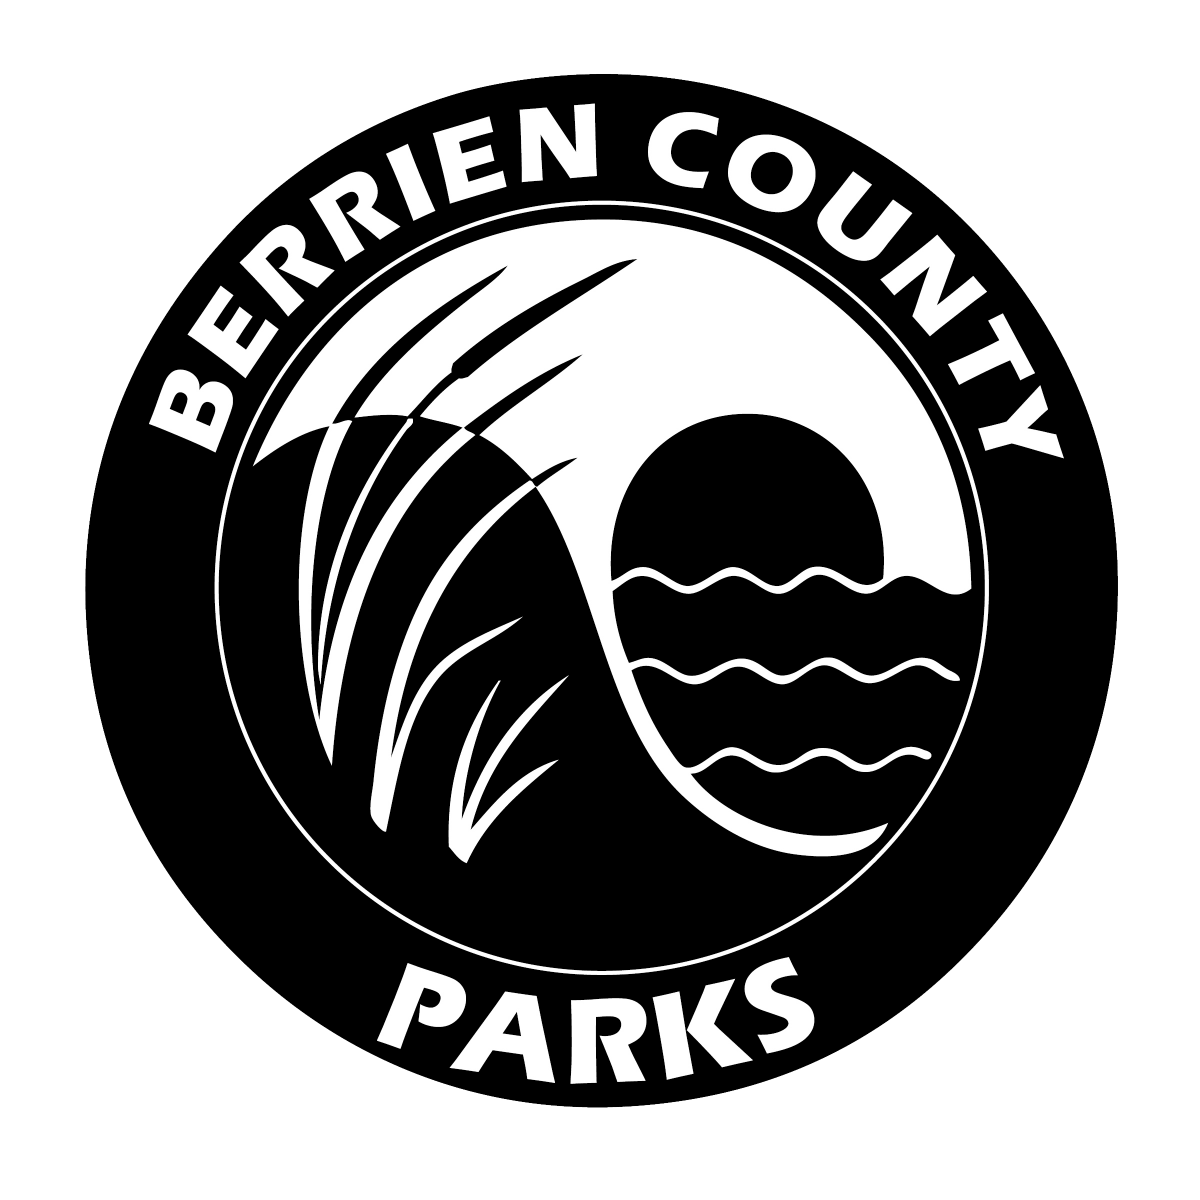 Berrien County Parks & Rec. Logo